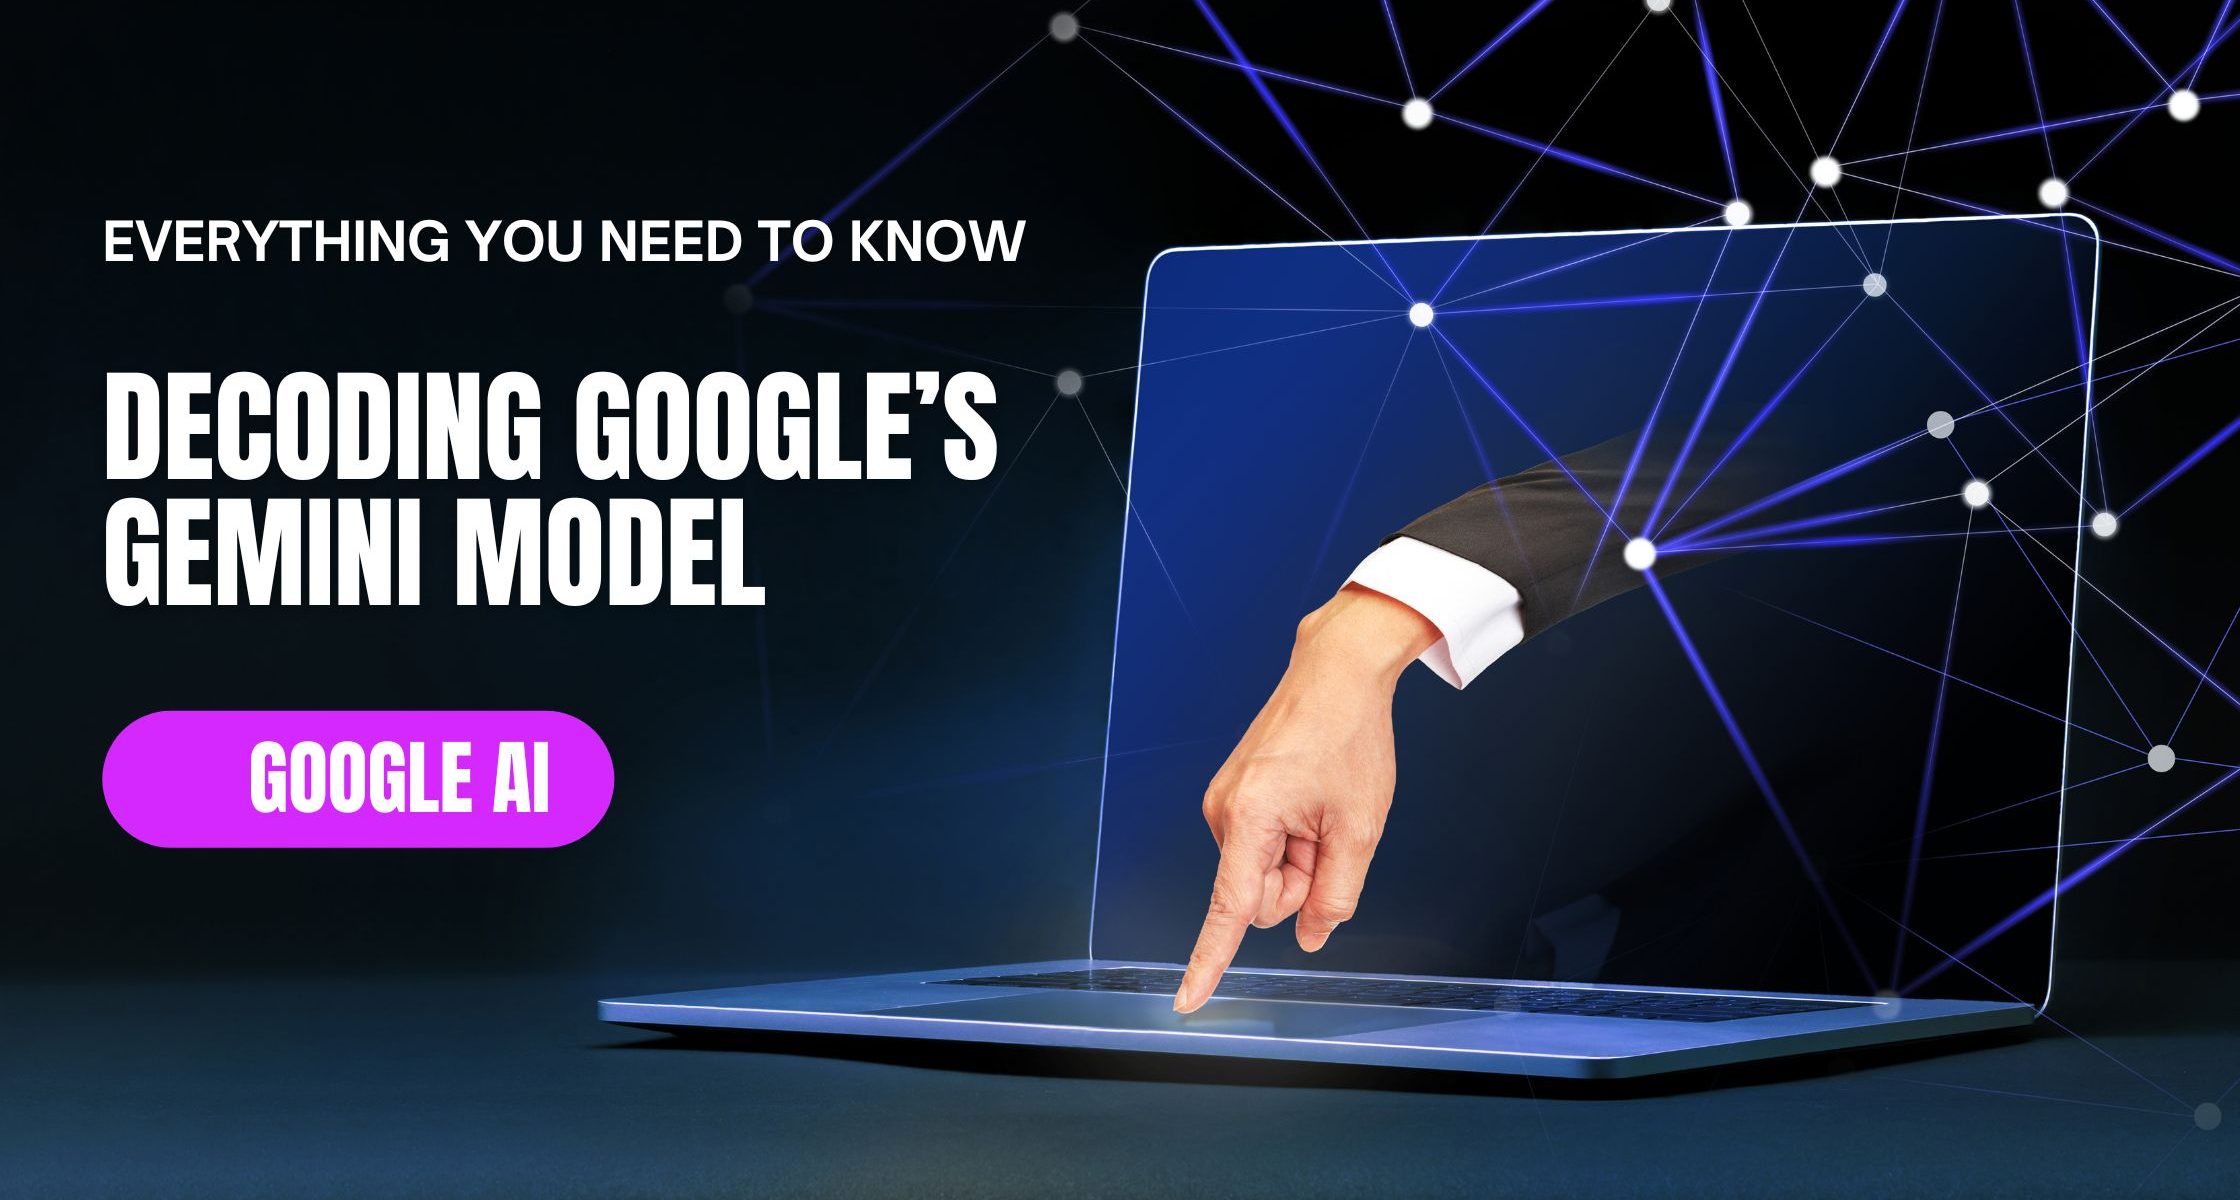 about google's gemini model